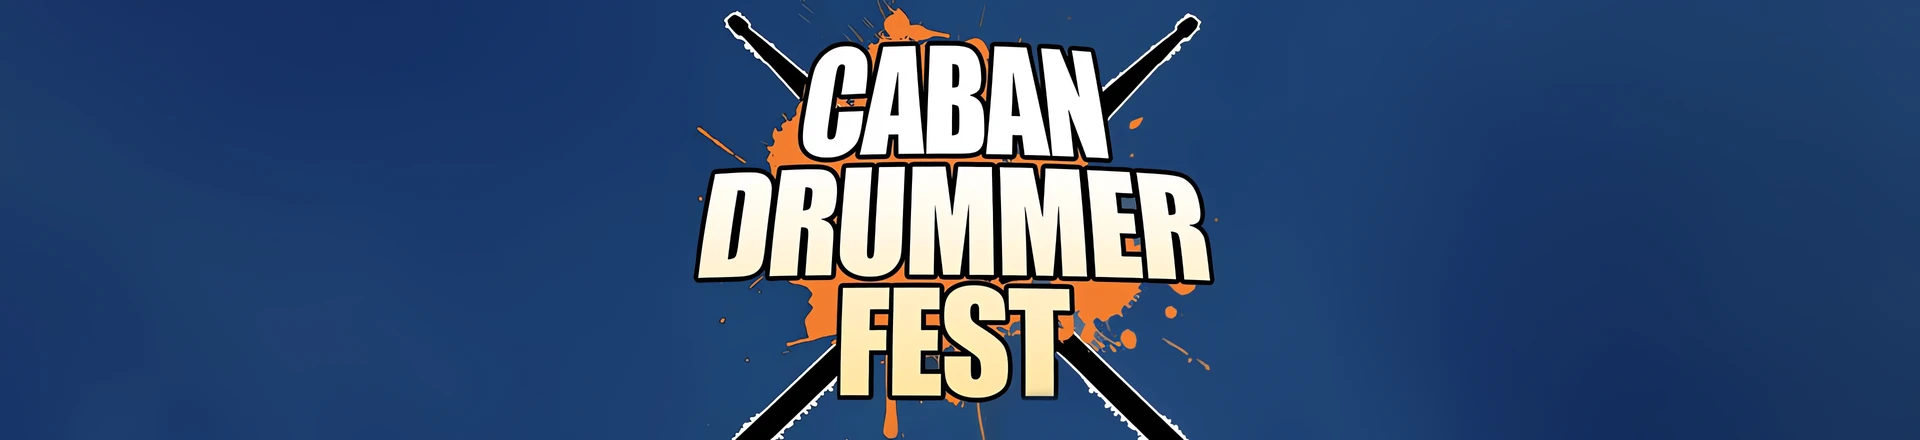 Rusza III edycja Caban Drummer Fest